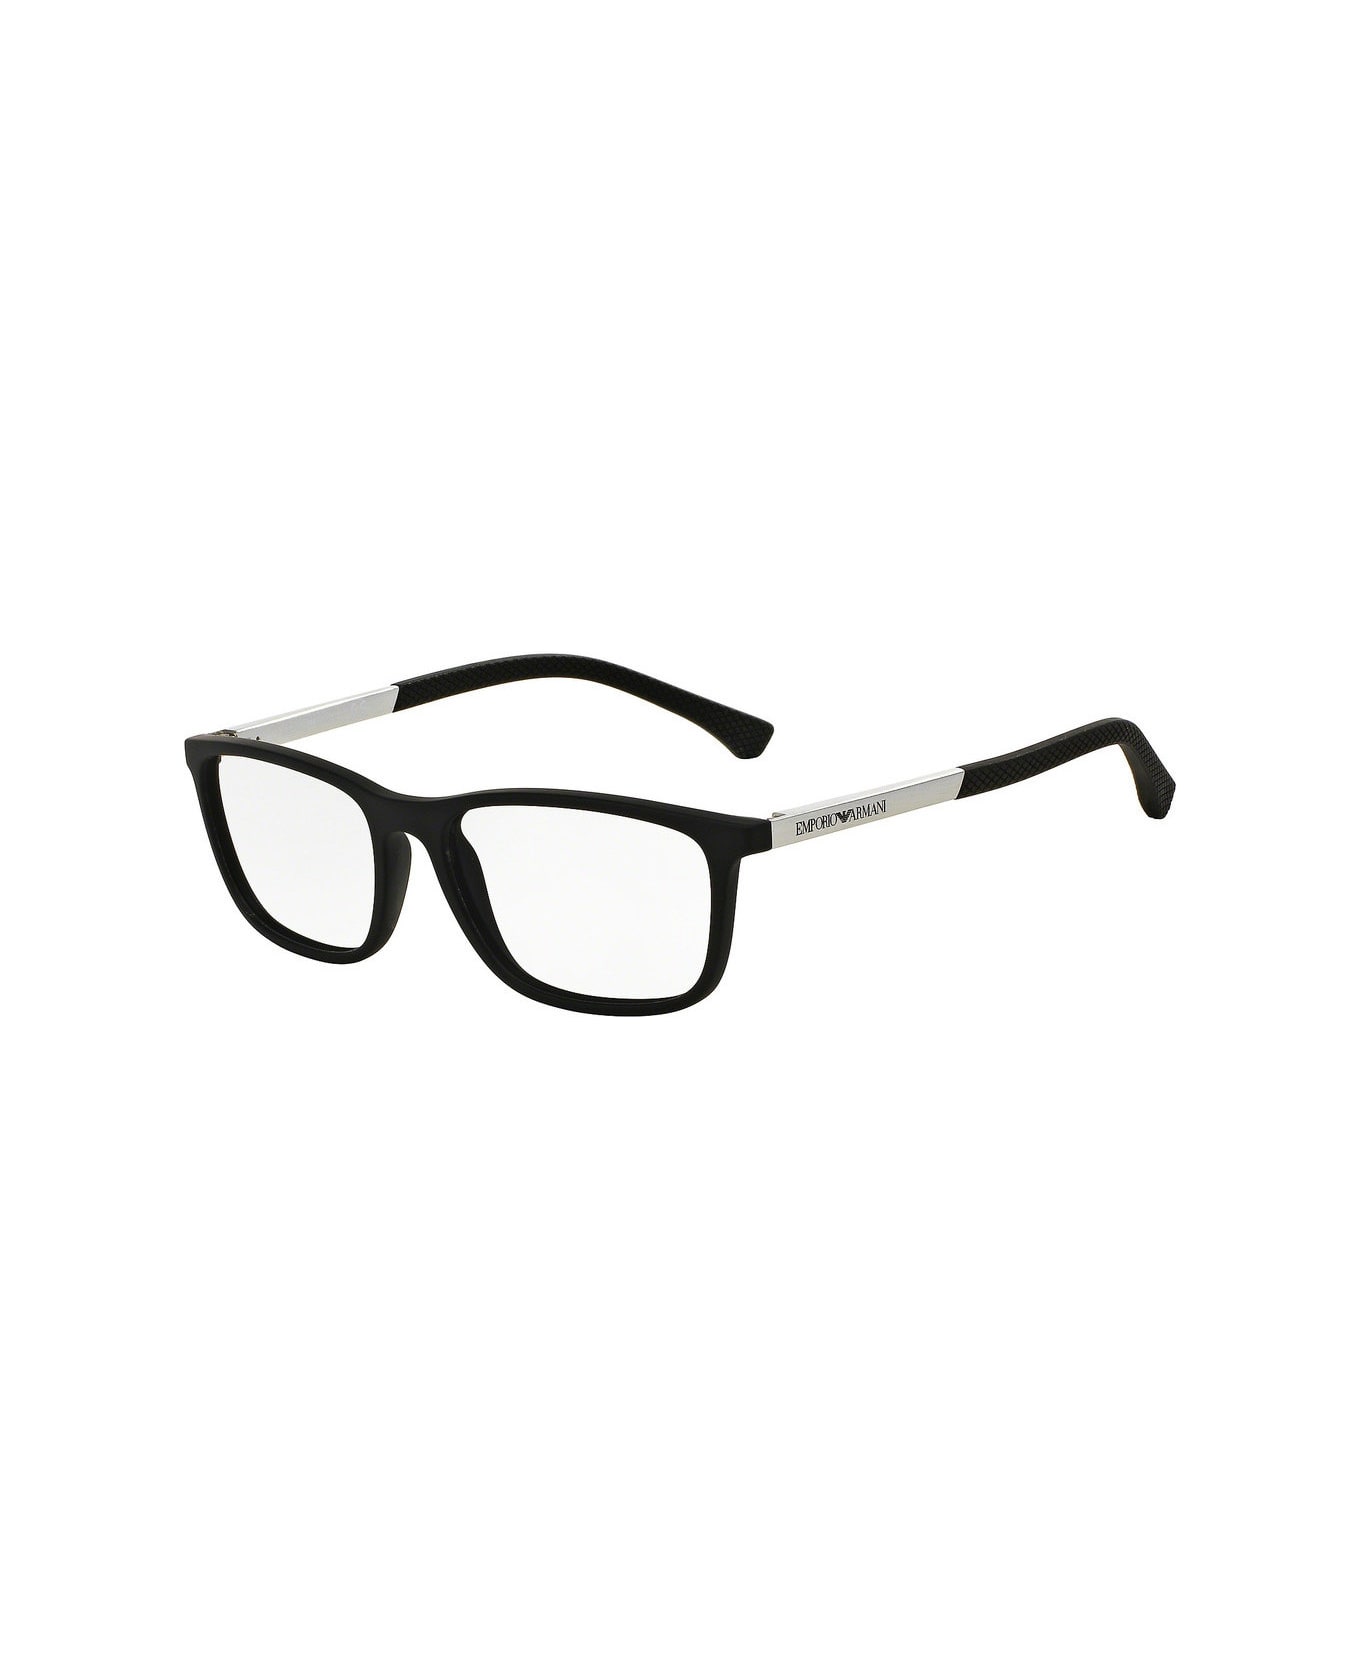 Emporio Armani EA3069 5063 Glasses - Nero astine acciaio アイウェア